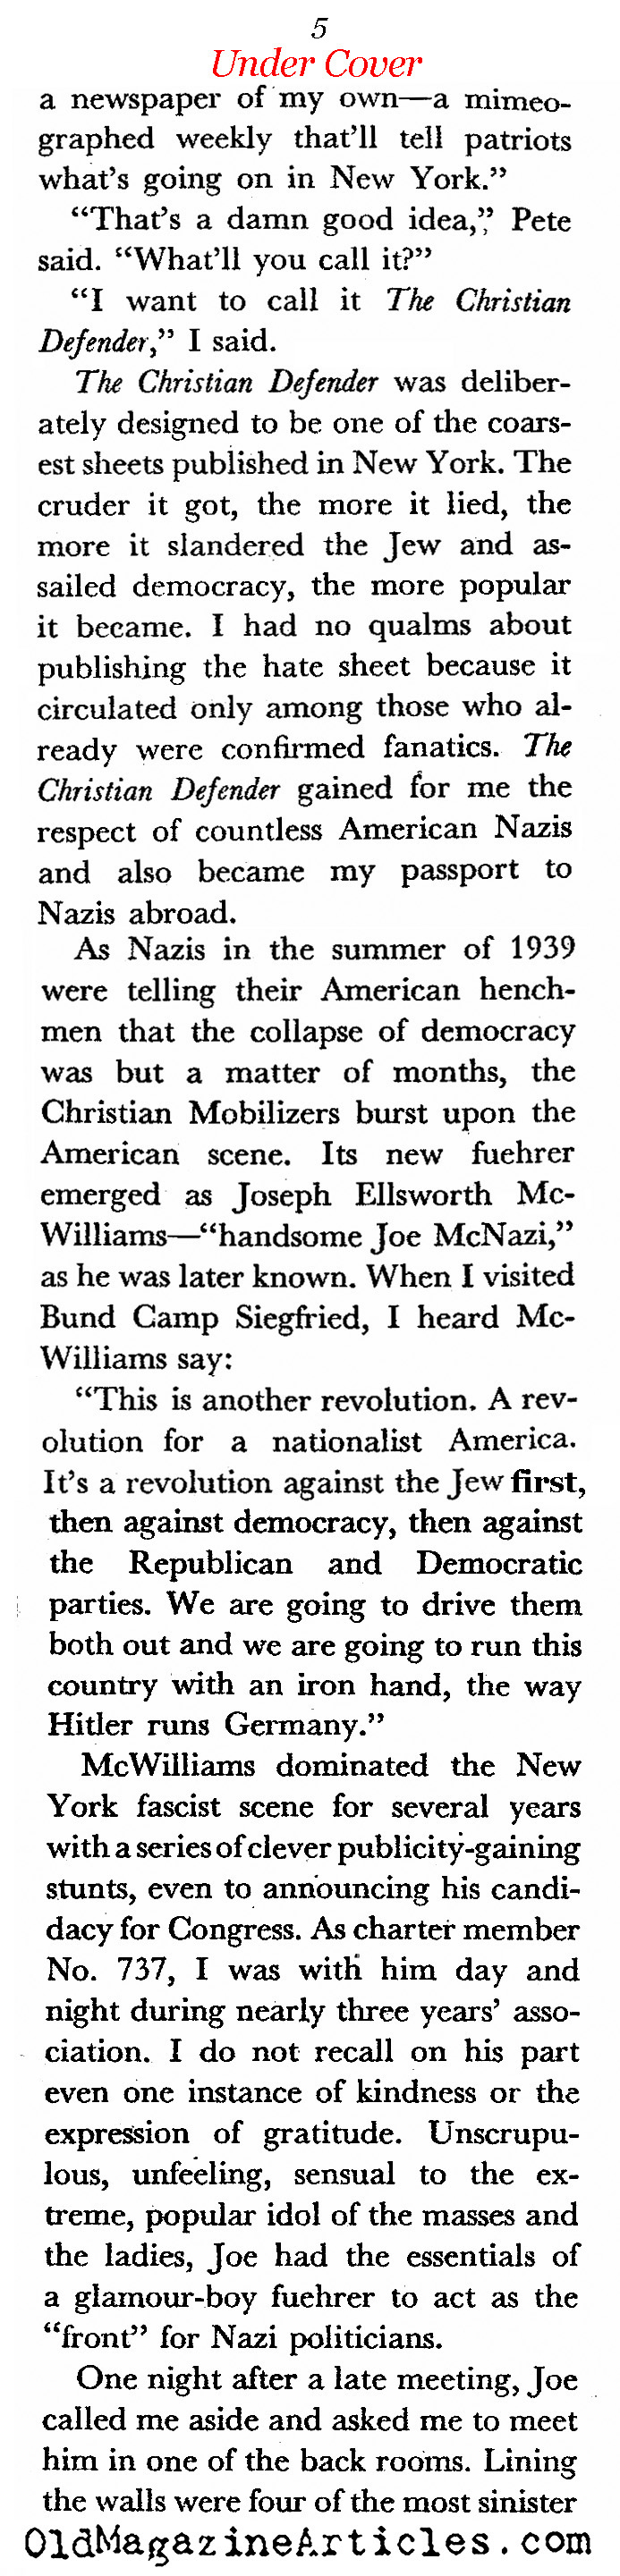 American Fascists Exposed (Coronet Magazine, 1944)